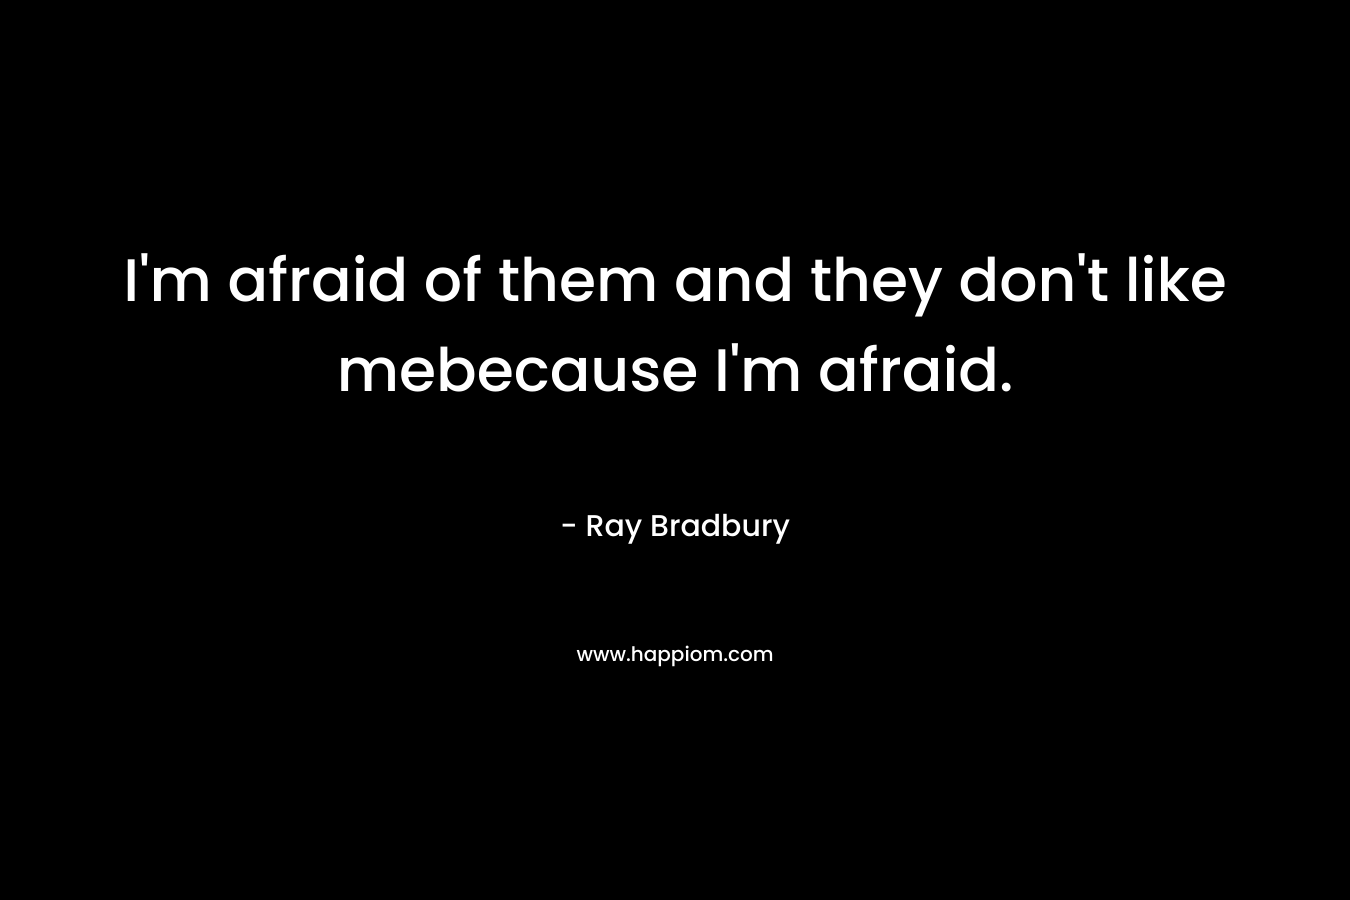 I’m afraid of them and they don’t like mebecause I’m afraid. – Ray Bradbury